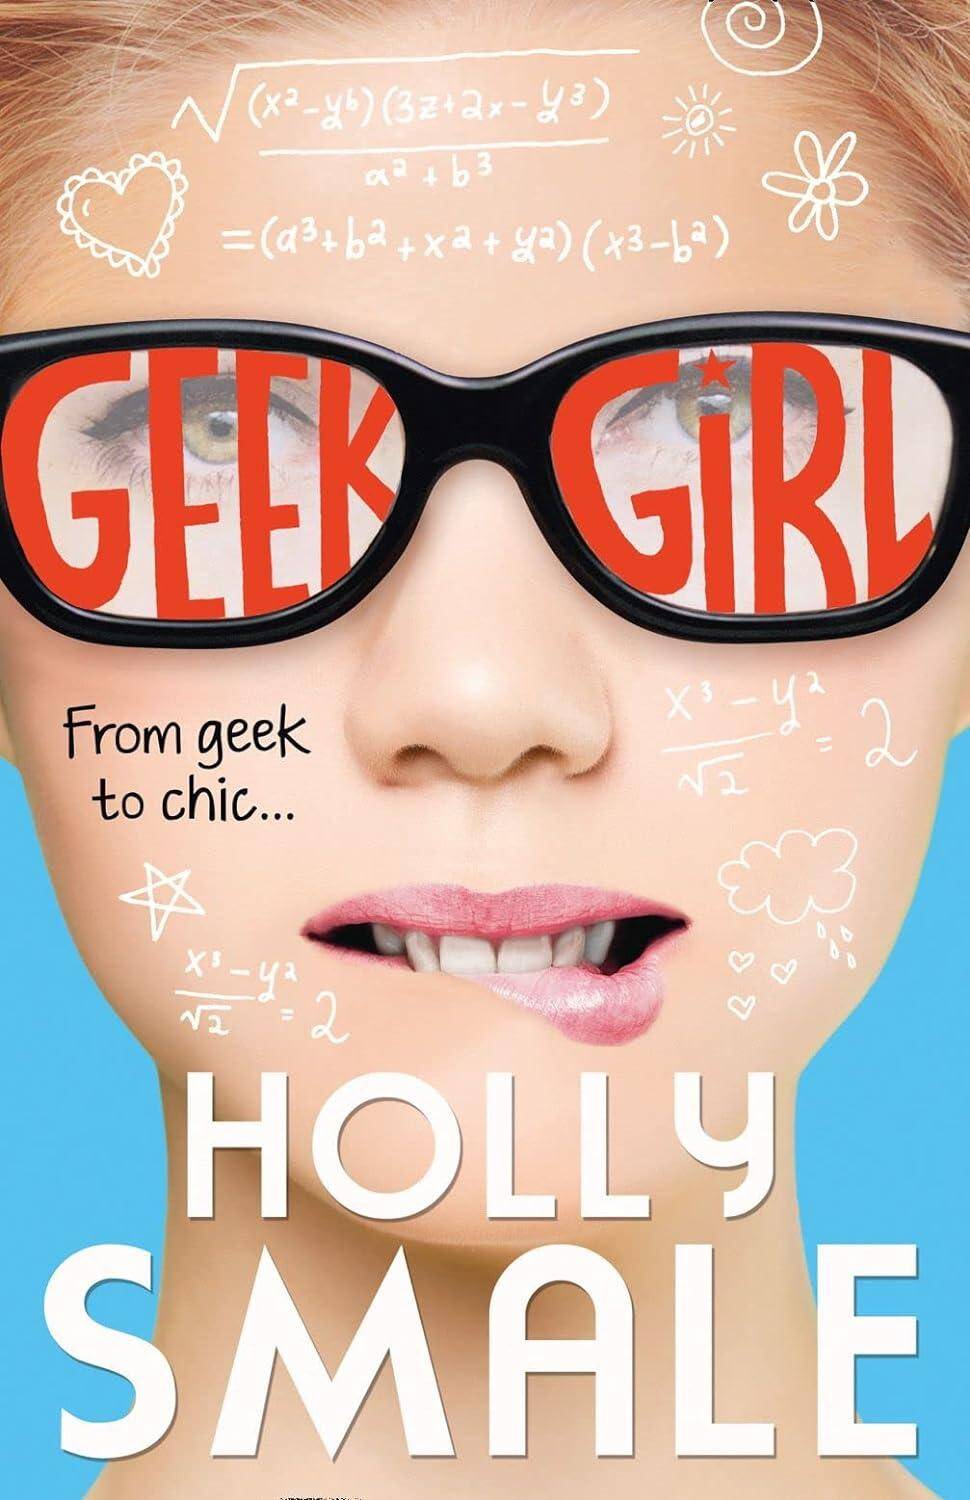 Geek Girl Holly Smale